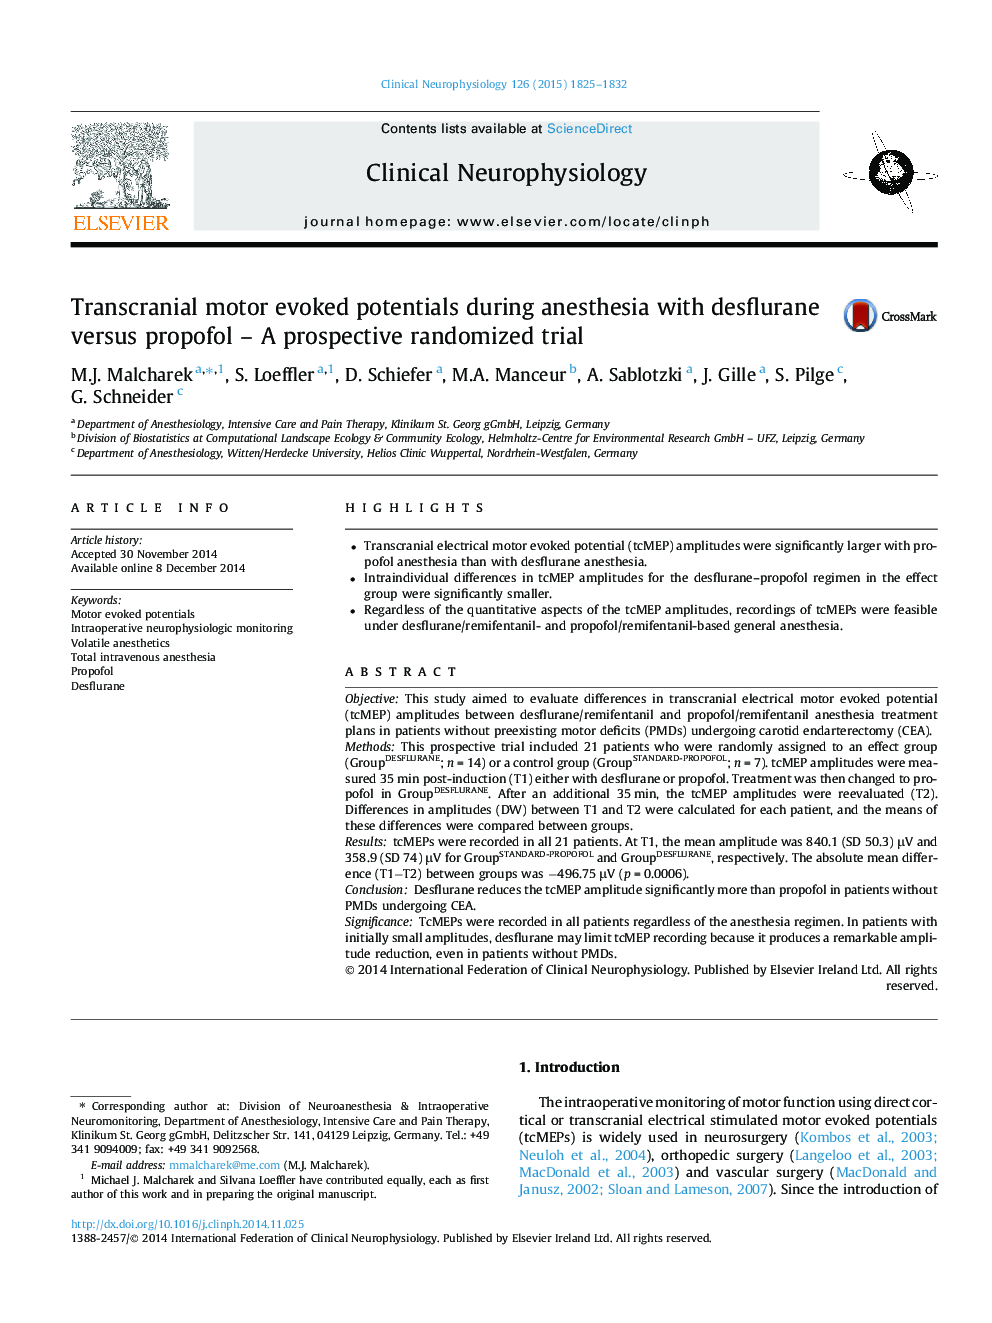 Transcranial motor evoked potentials during anesthesia with desflurane versus propofol – A prospective randomized trial